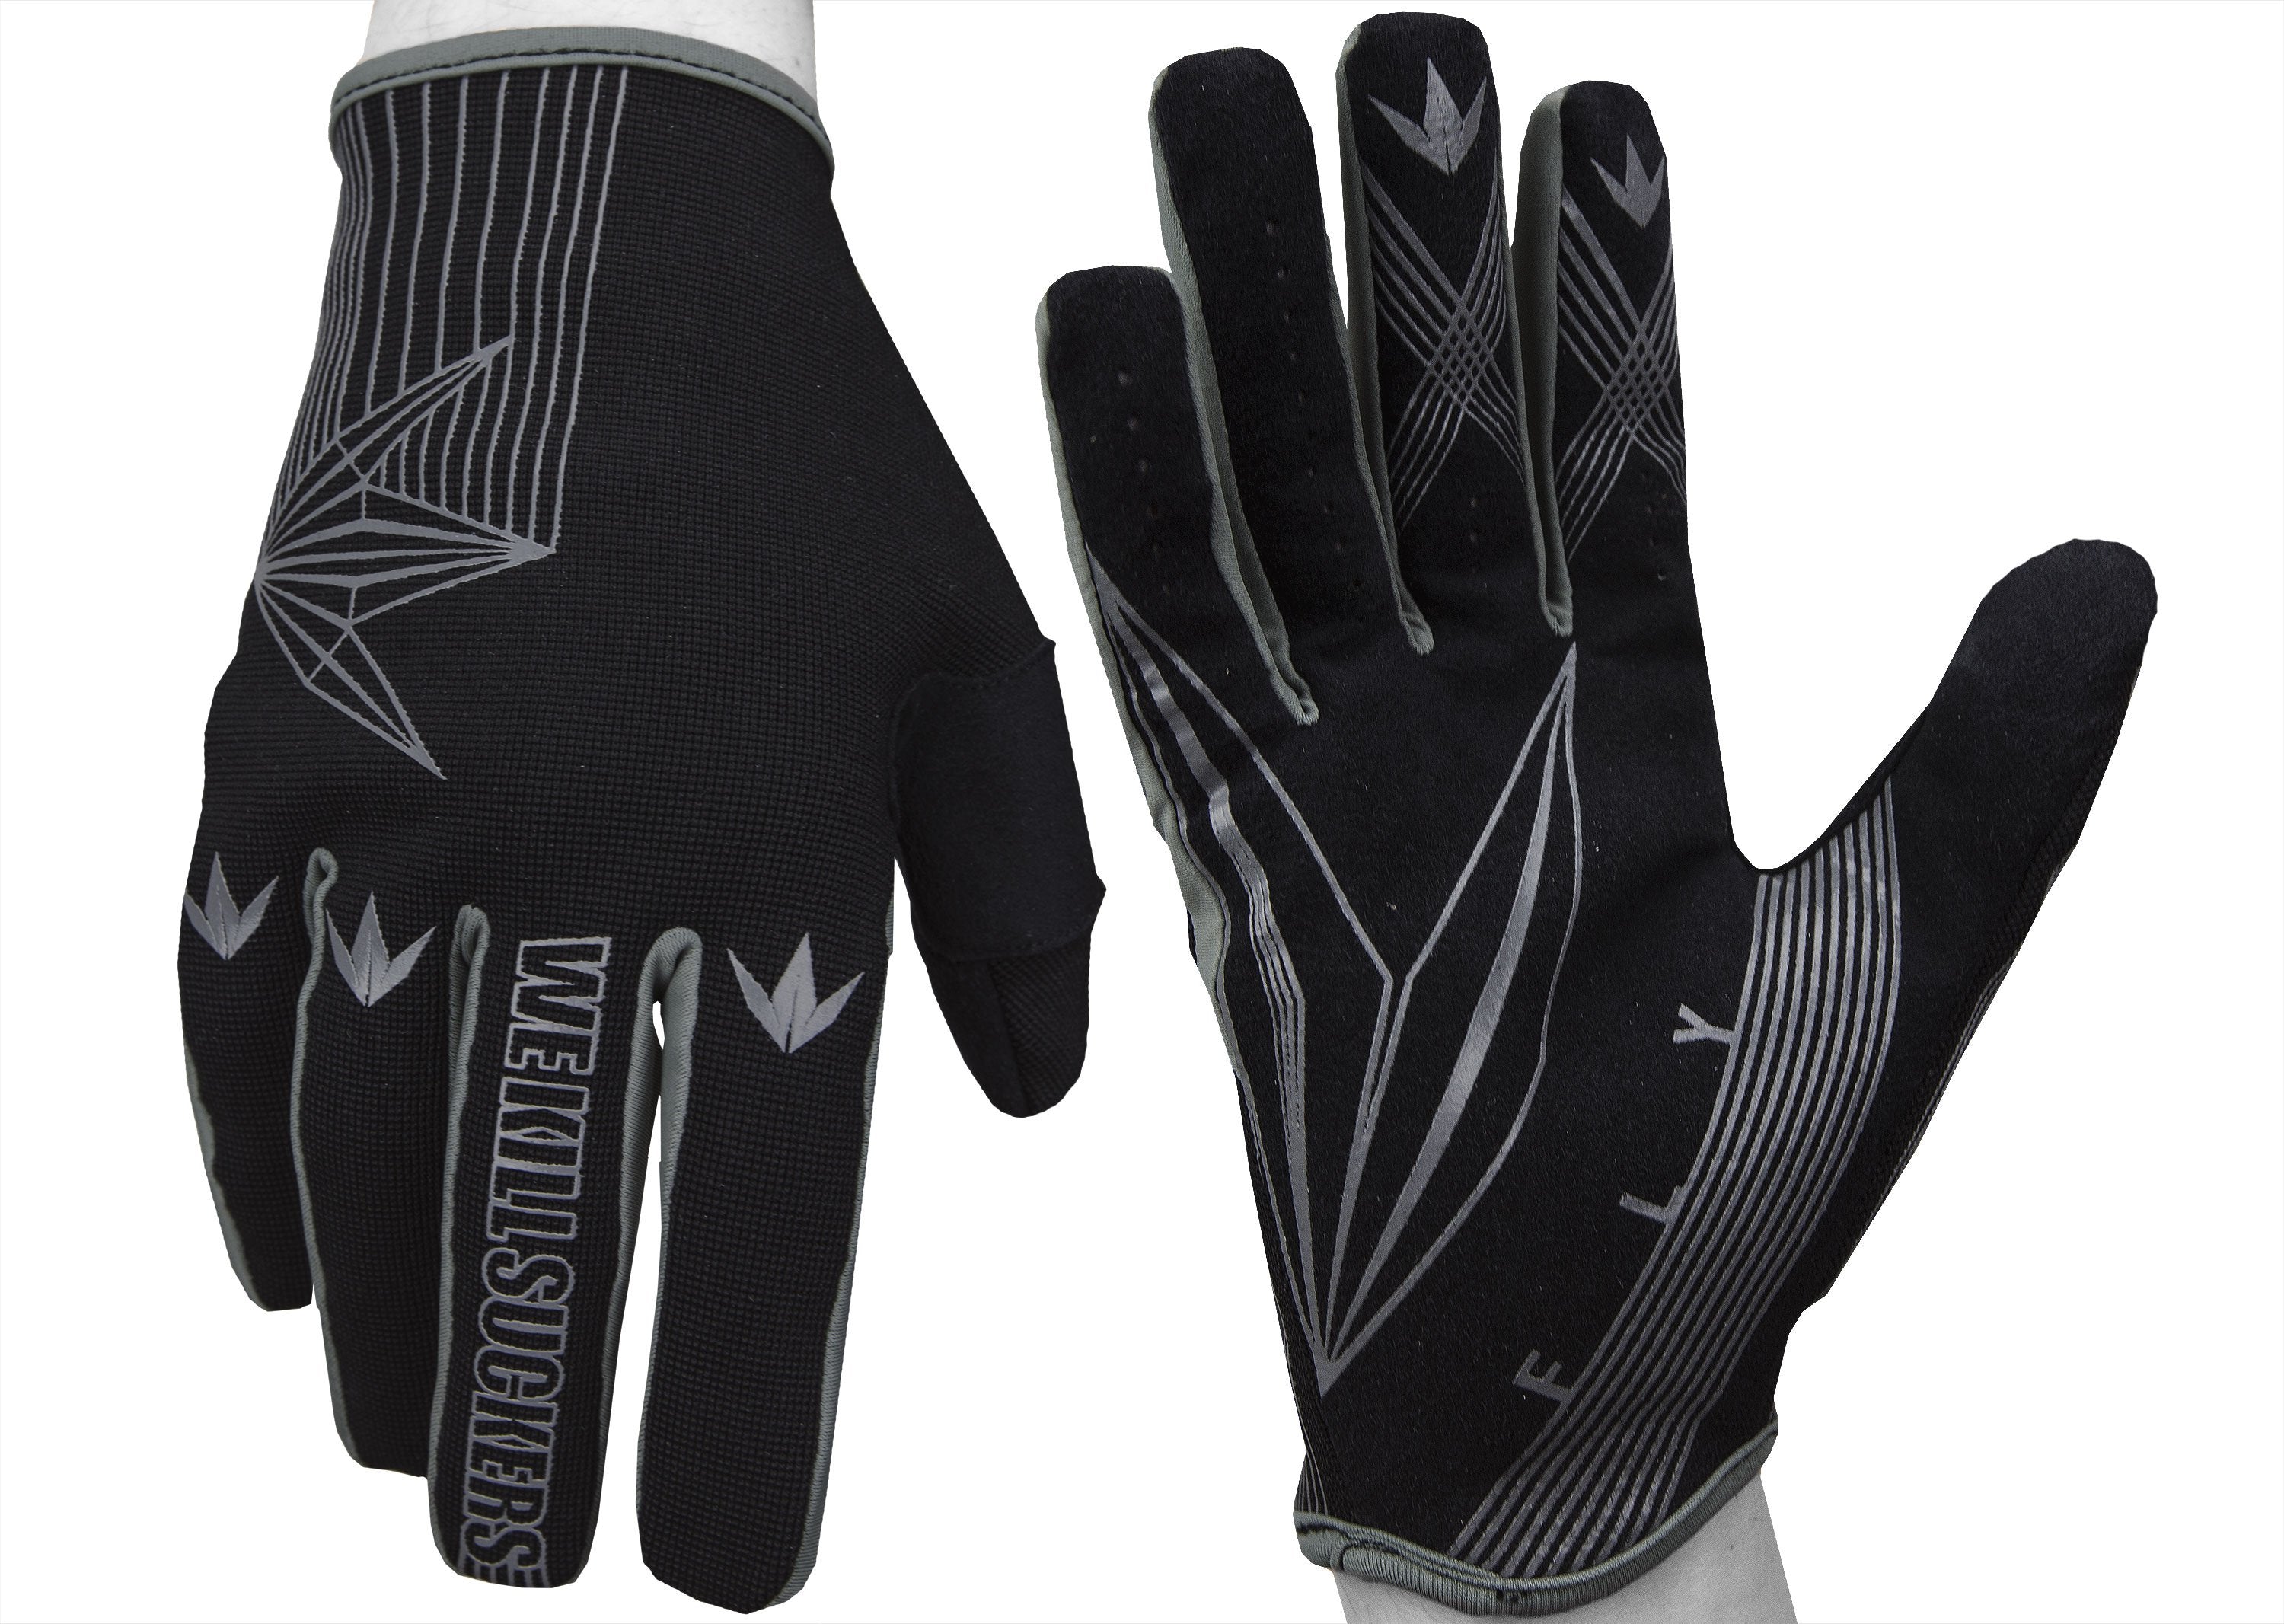 Thin Work Gloves for Safety: Featherlite Styles